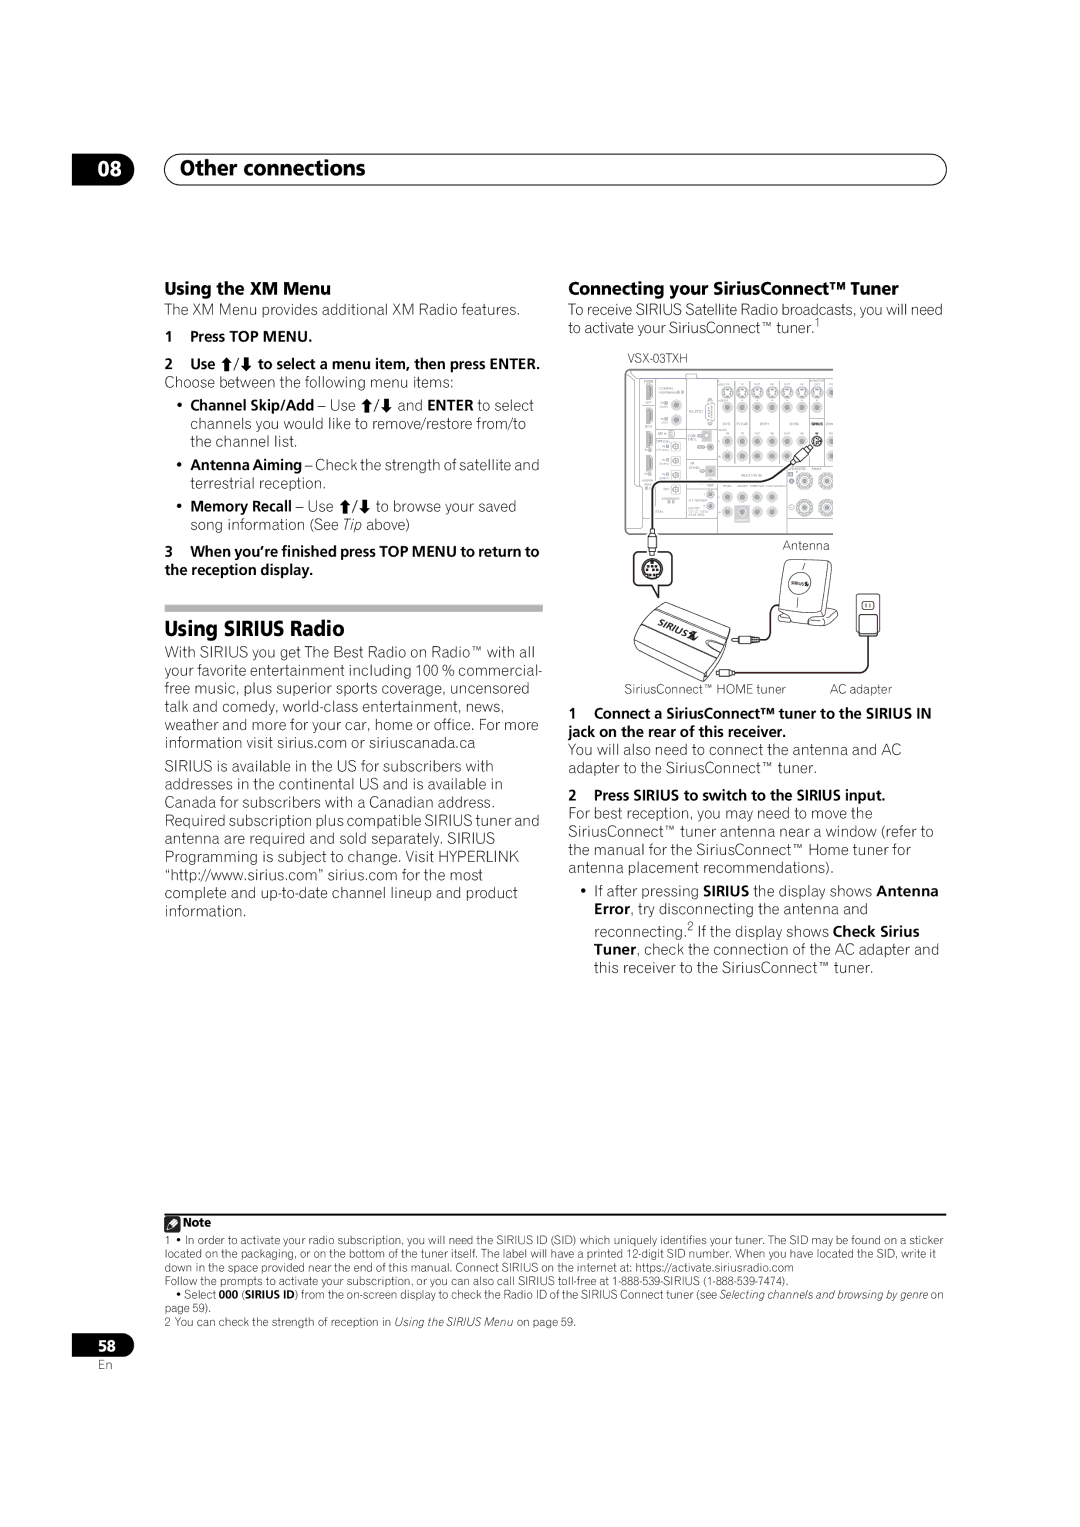 Pioneer VSX-03TXH manual Using Sirius Radio, Using the XM Menu, Connecting your SiriusConnect Tuner 